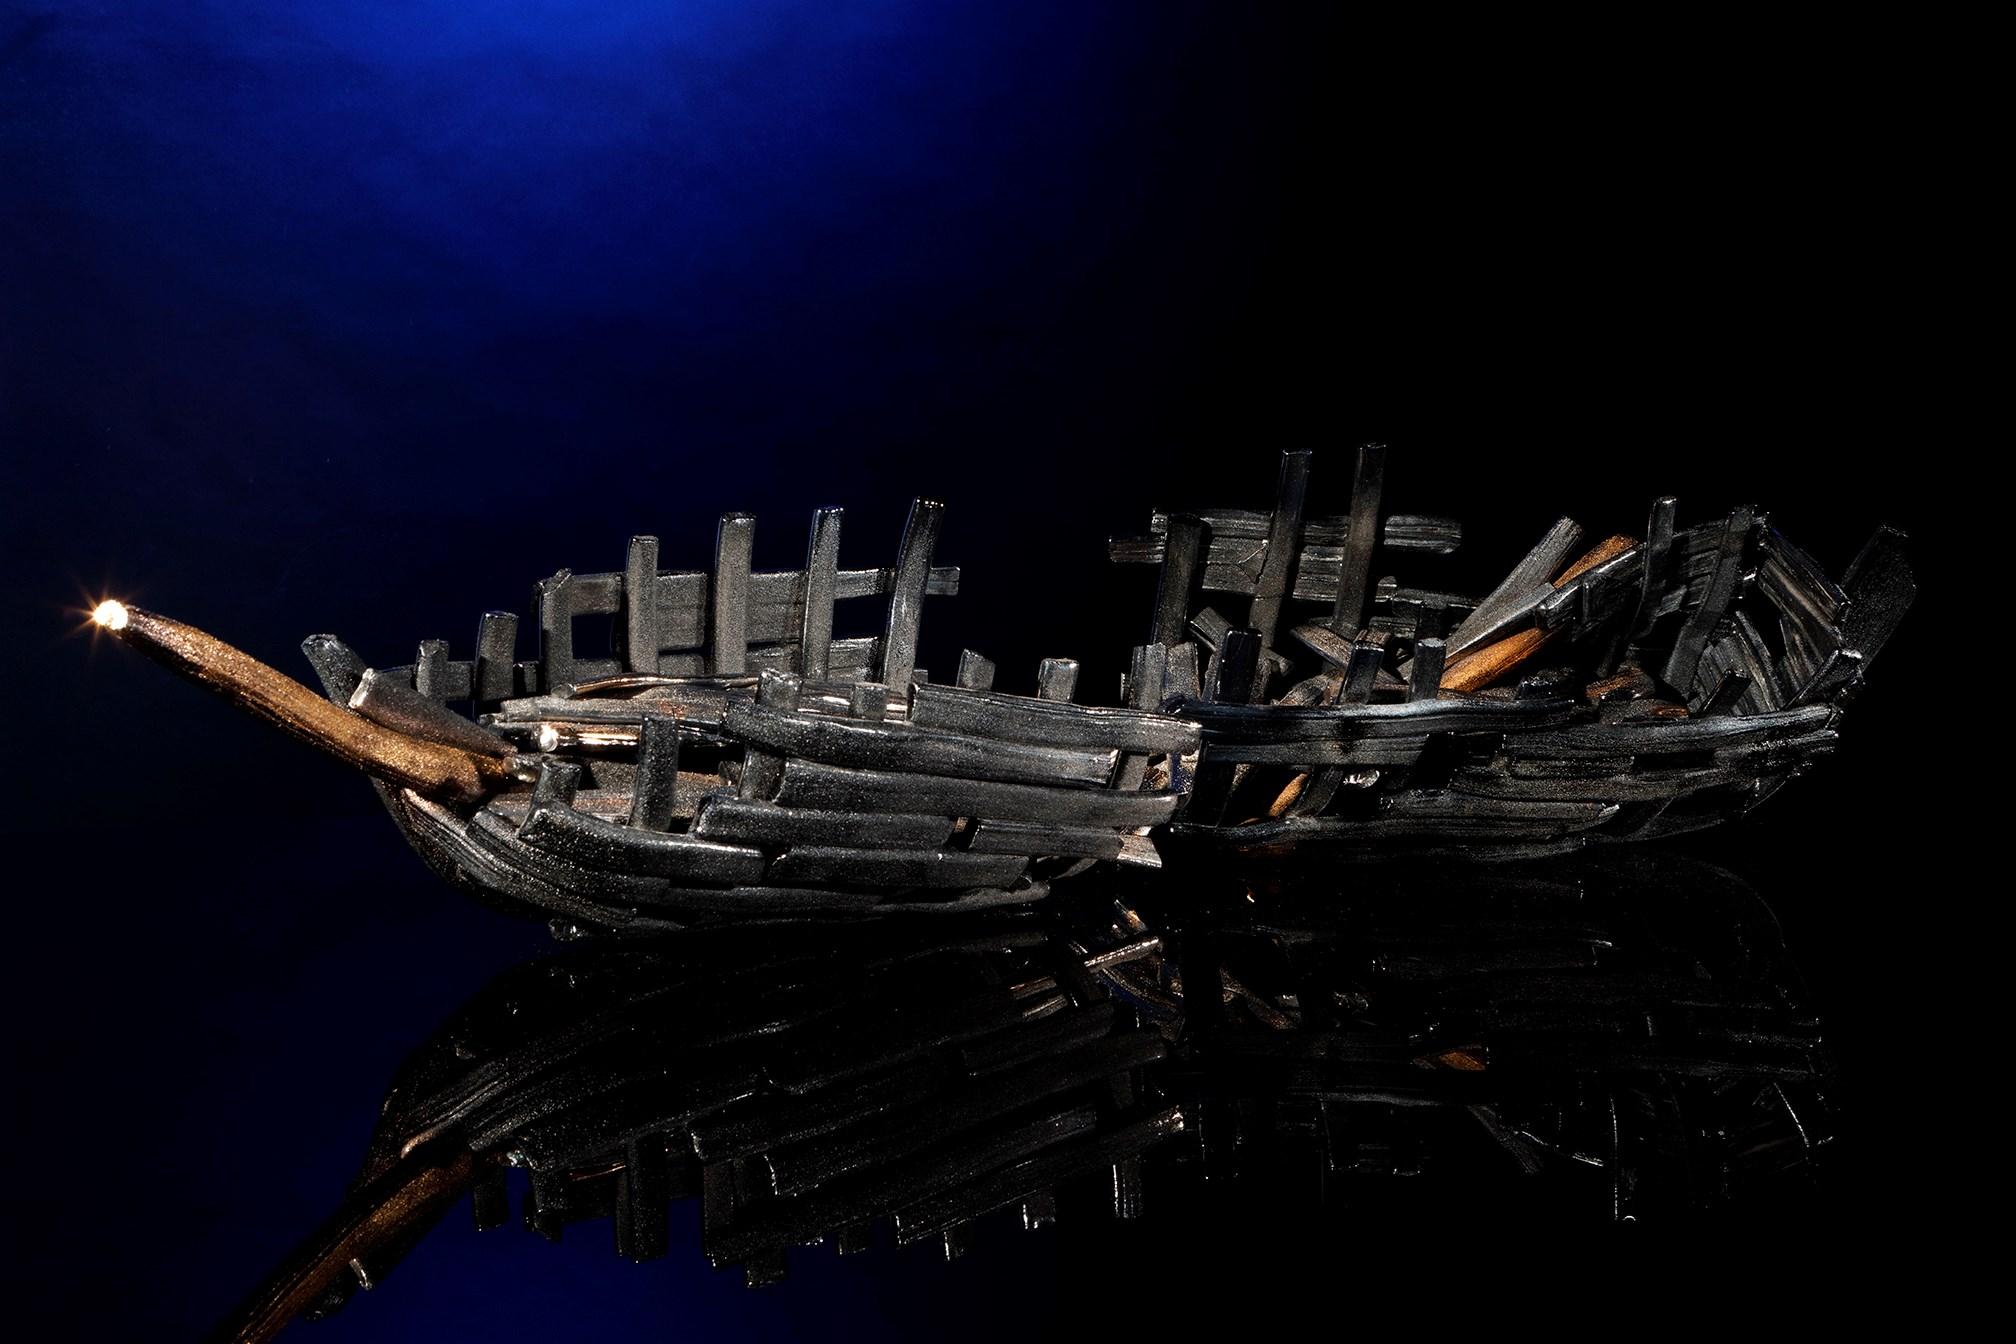 Wreck 2401-1GB, black glass shipwreck sculpture by James Devereux 4